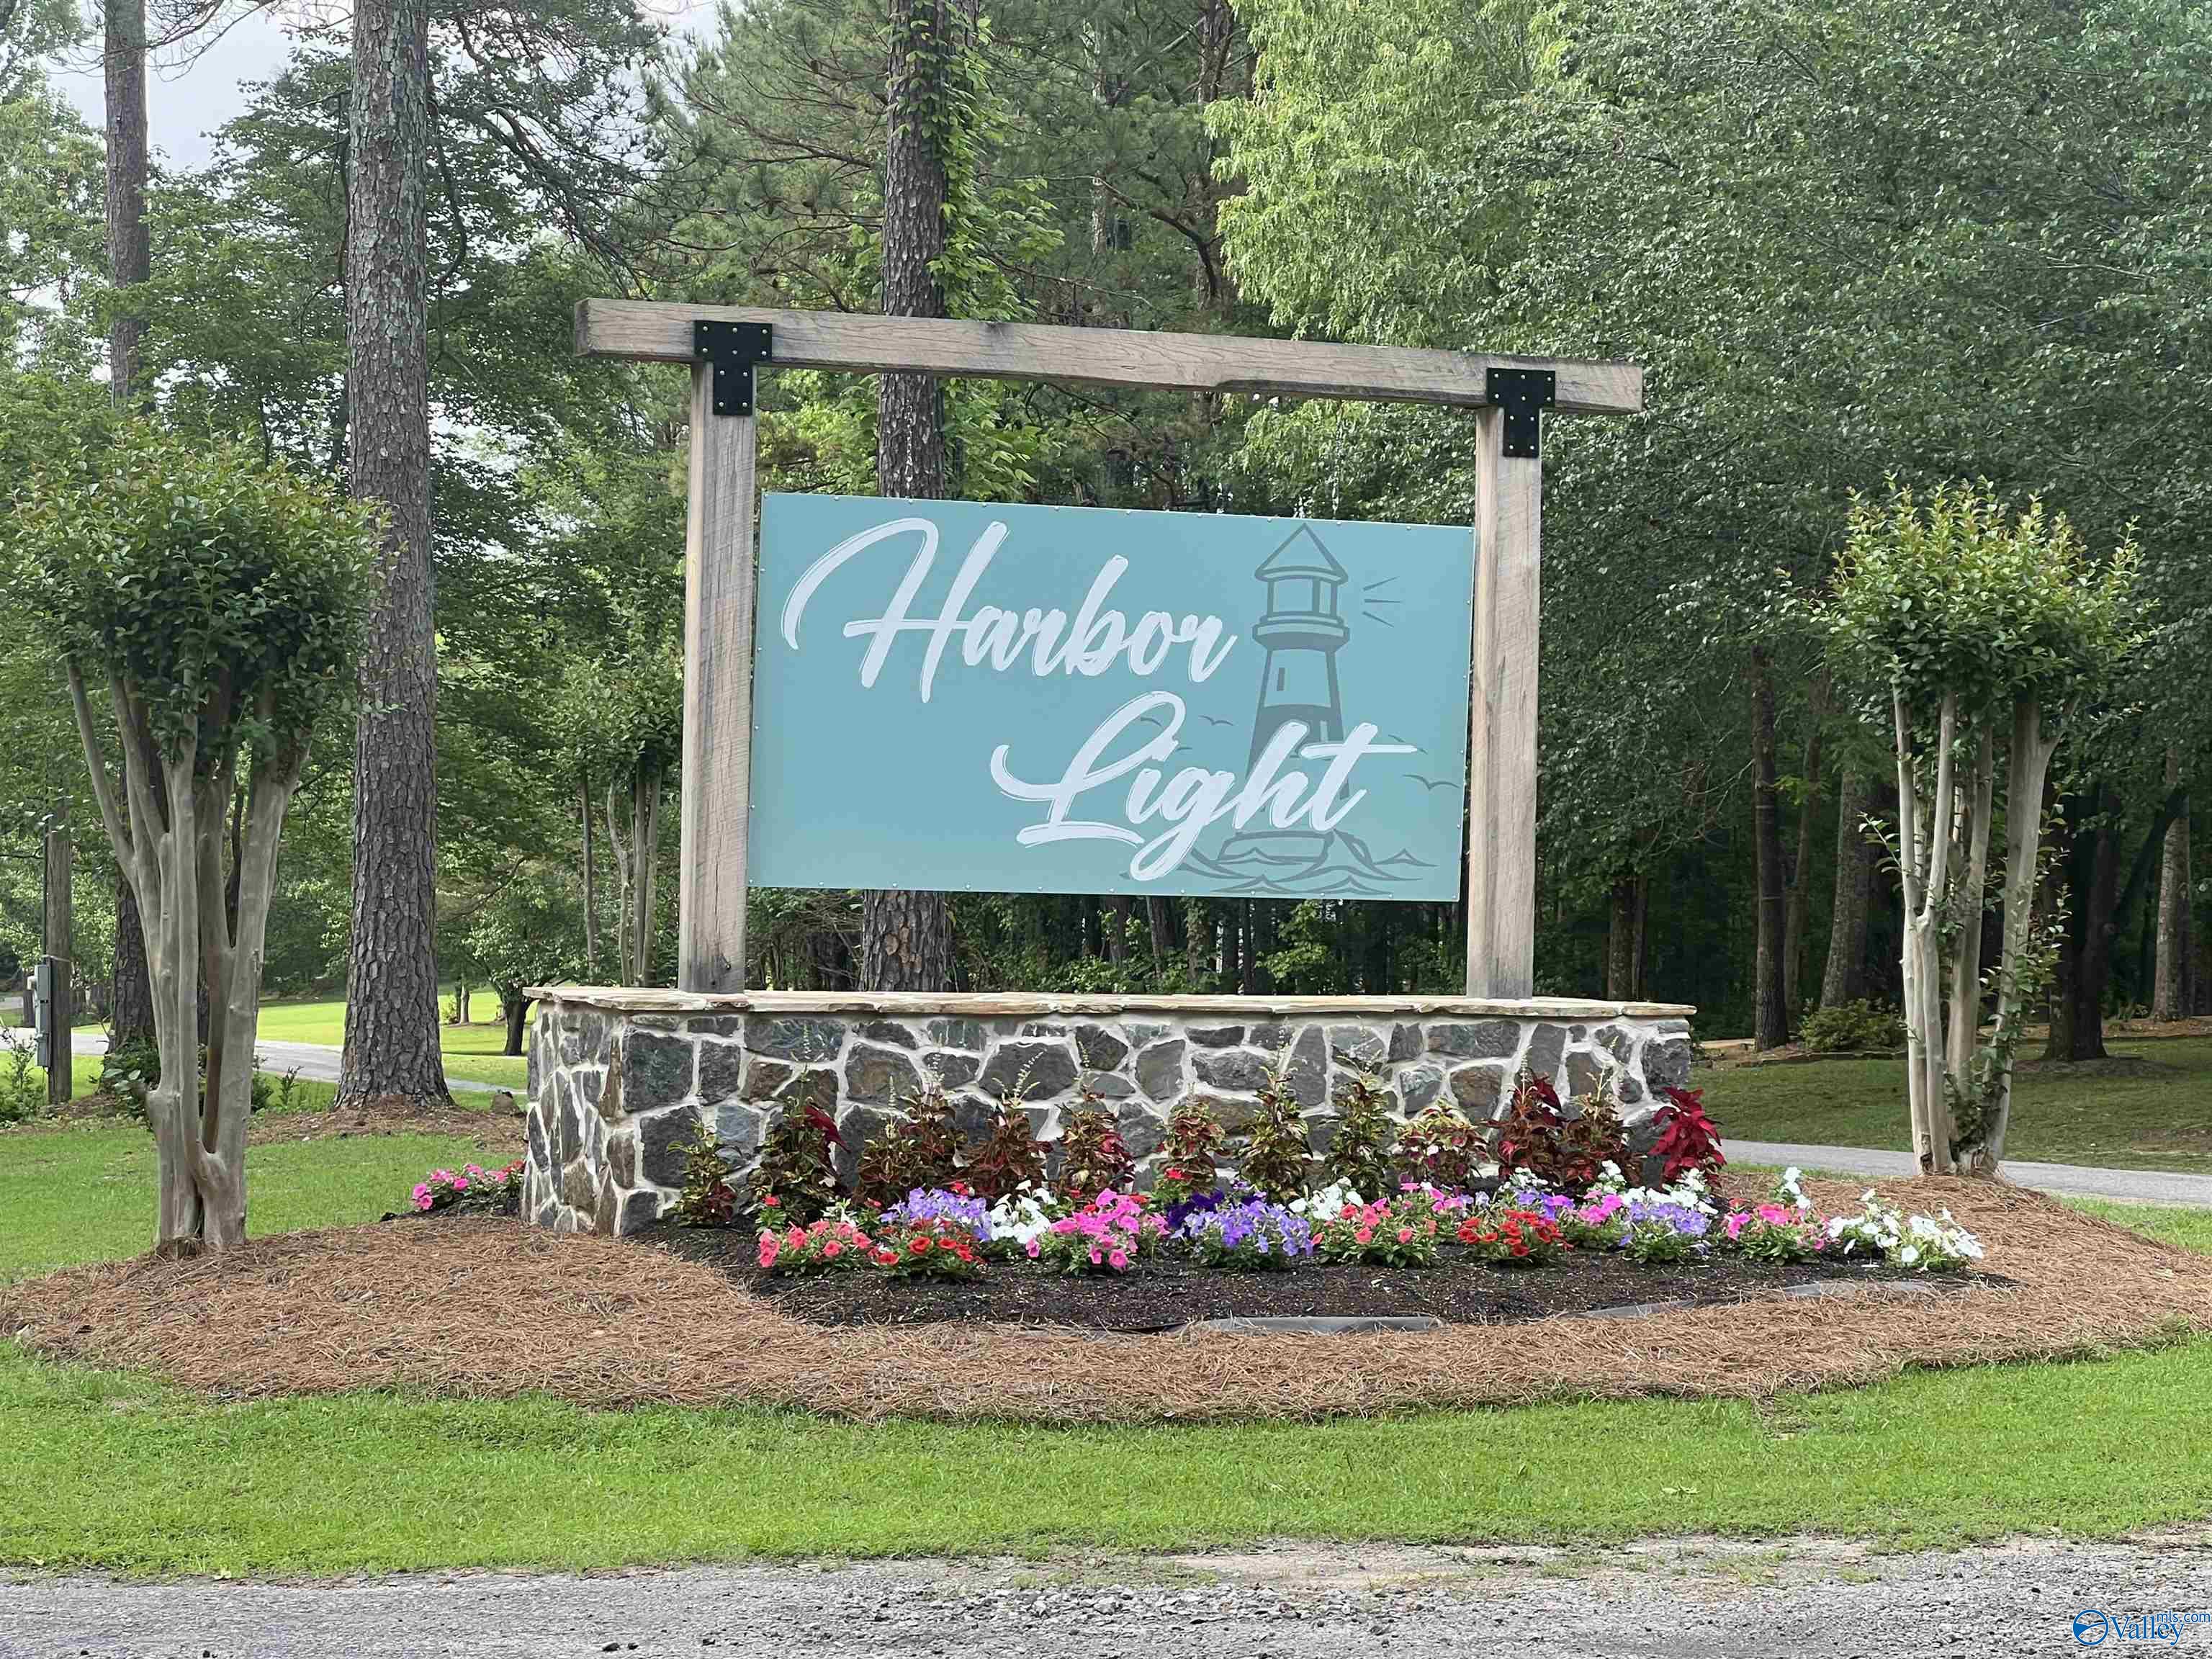 Property: 30 Harbor Loop,Jasper, AL